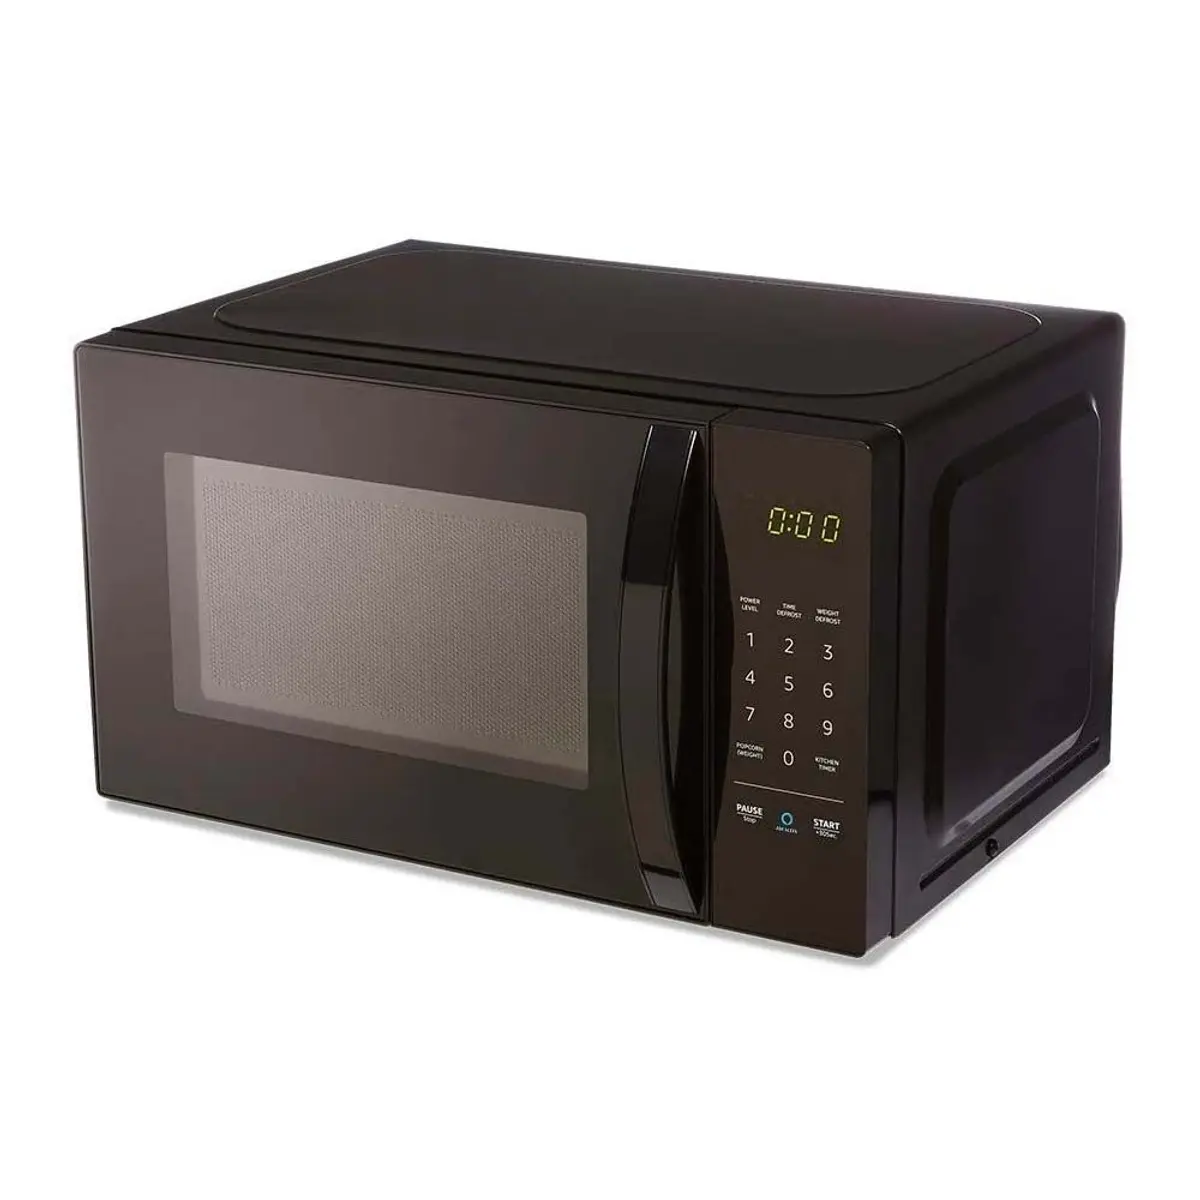 AmazonBasics Small Microwave